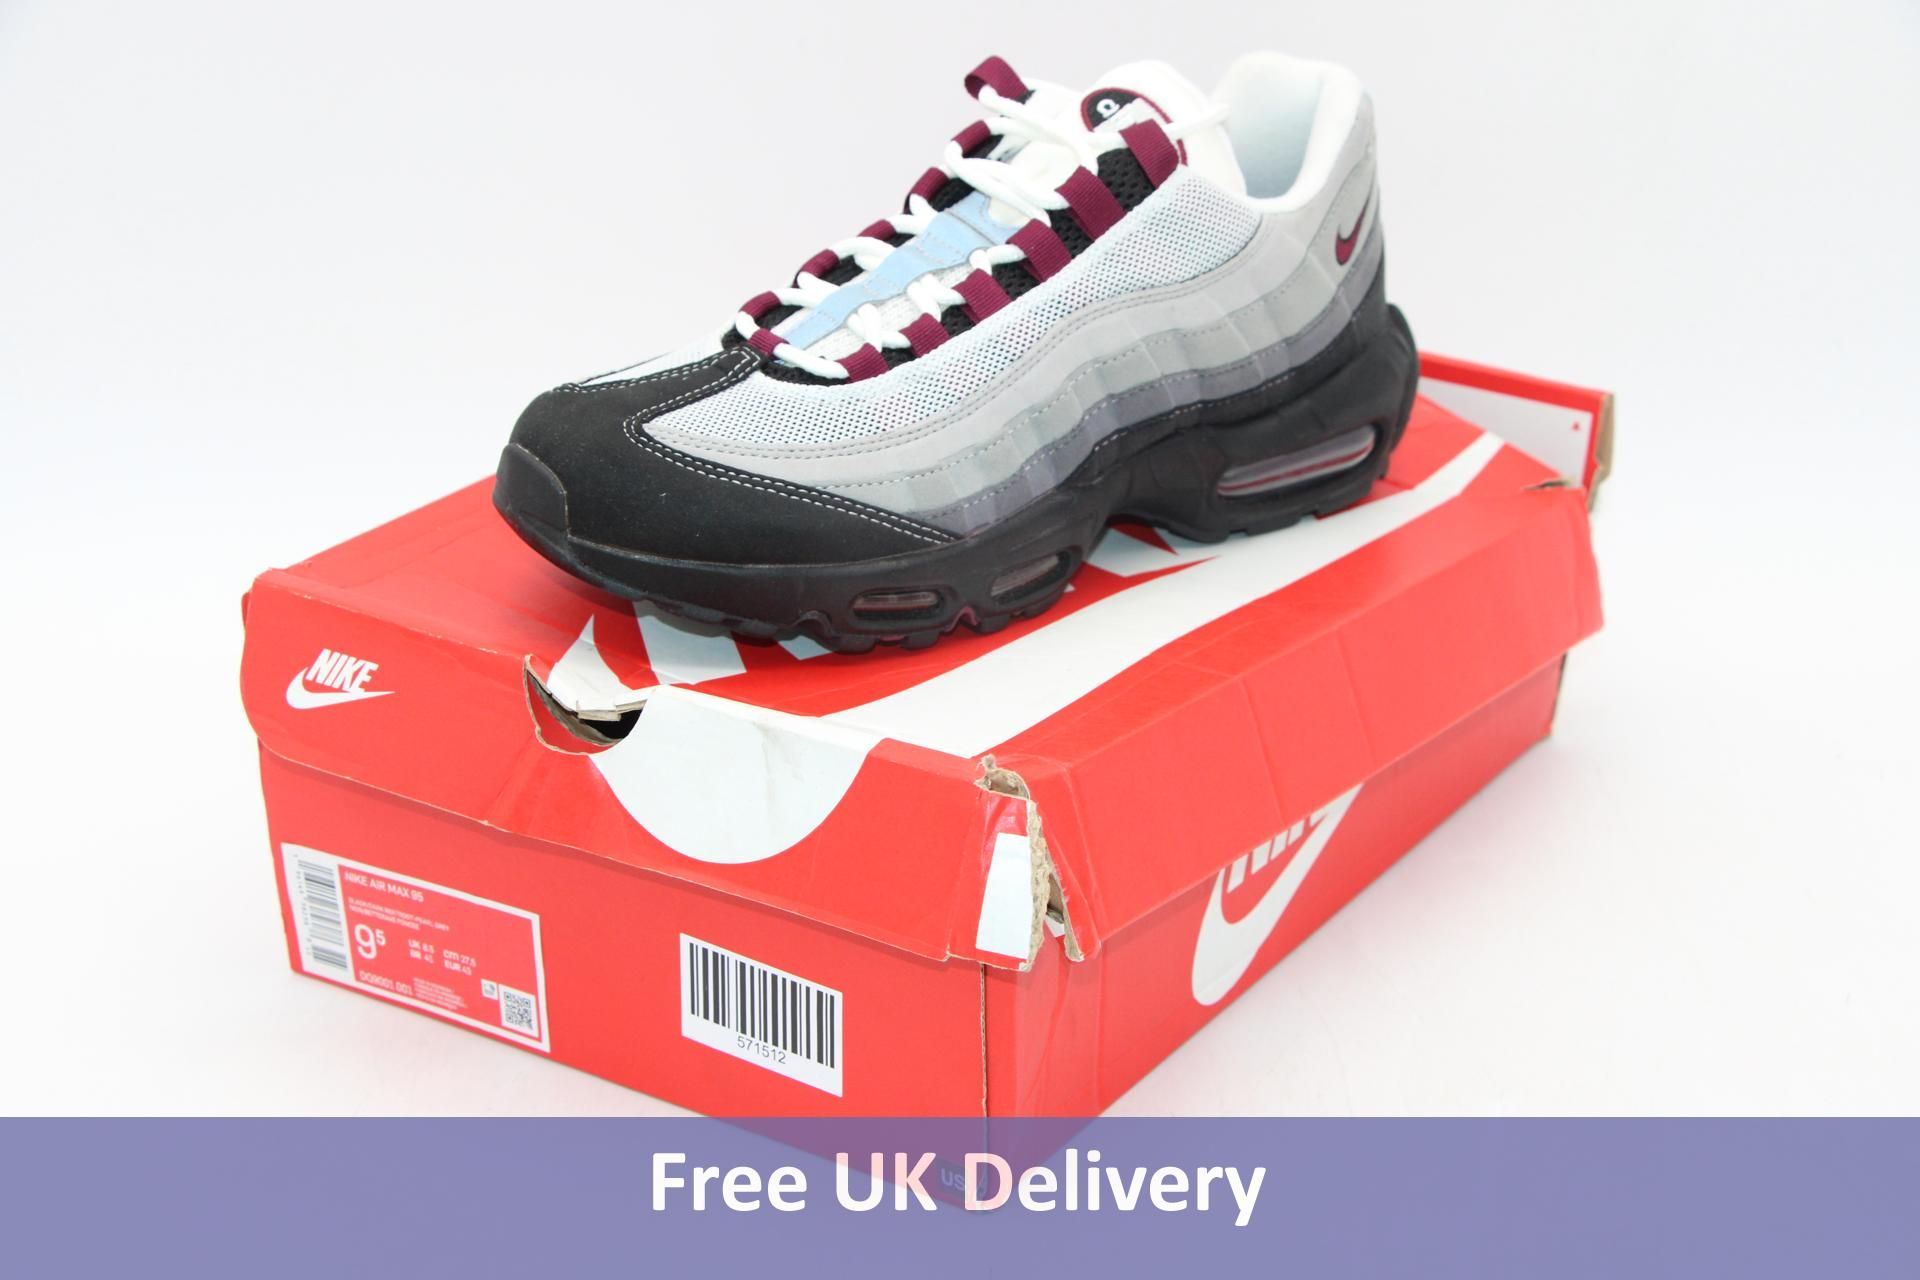 Nike Air Max 95, Black/Dark Beetroot/Pearl Grey, UK 8.5. Box damaged